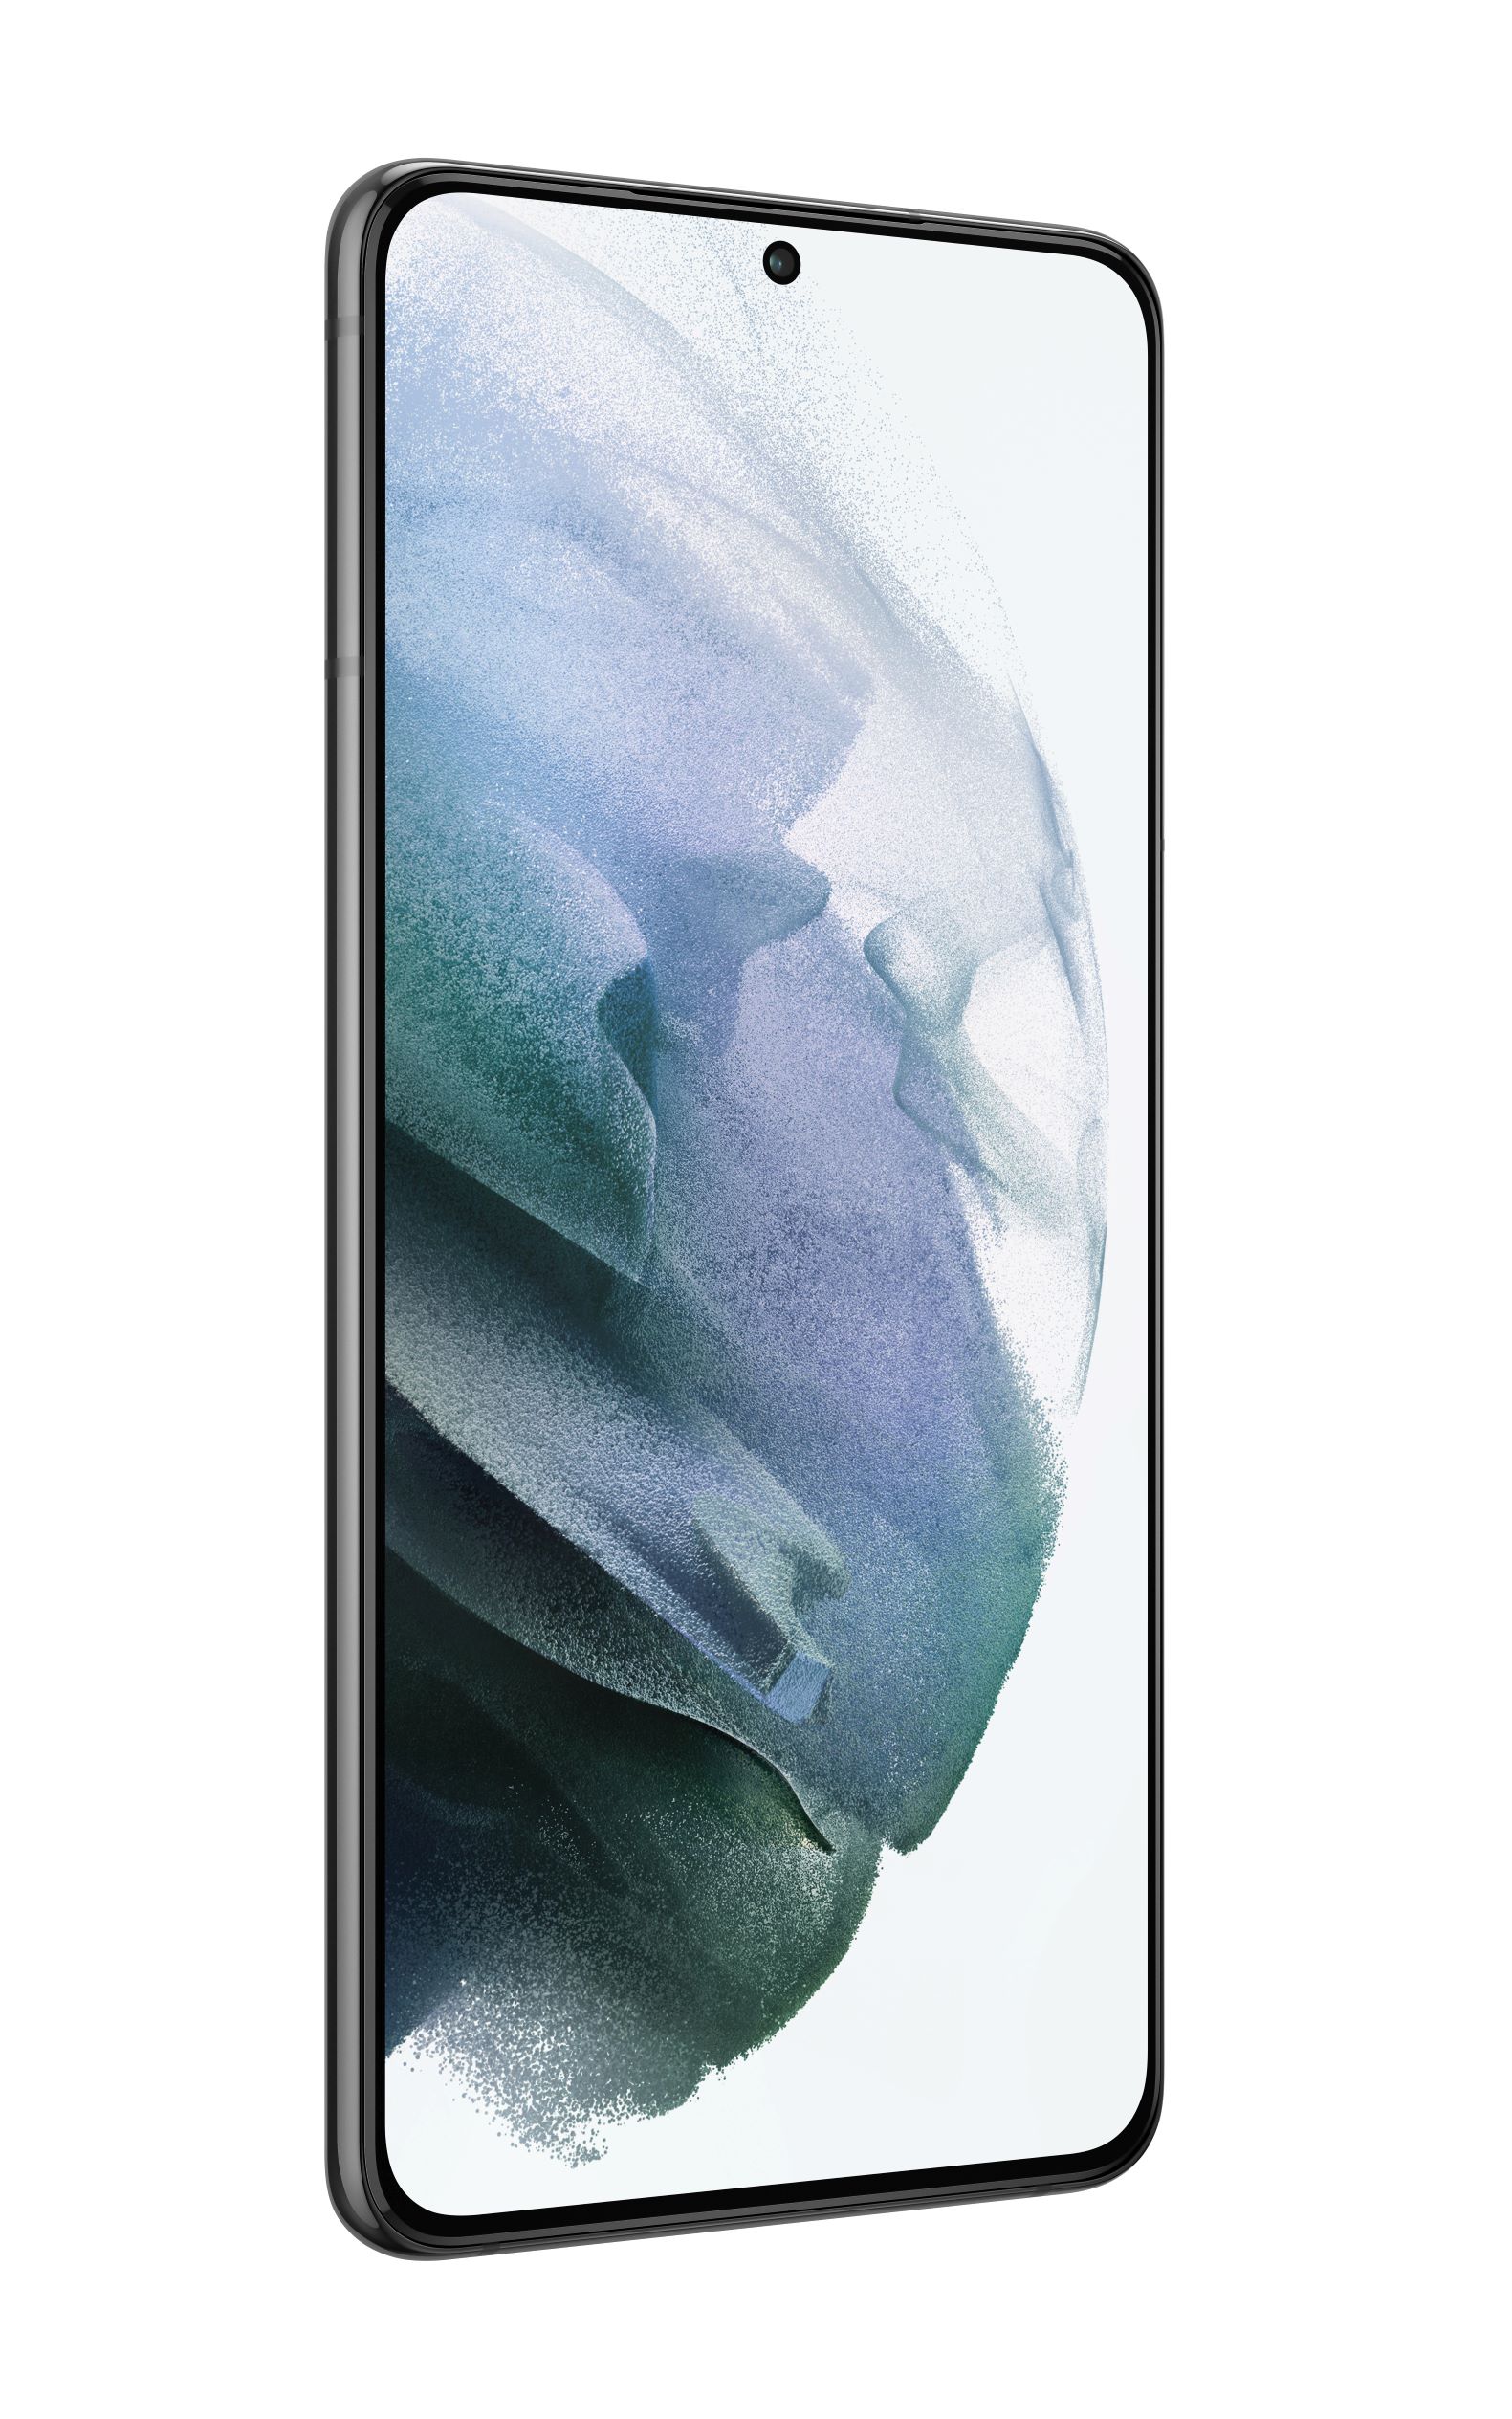 Verizon Samsung Galaxy S21+ 5G Black 128GB - image 1 of 2